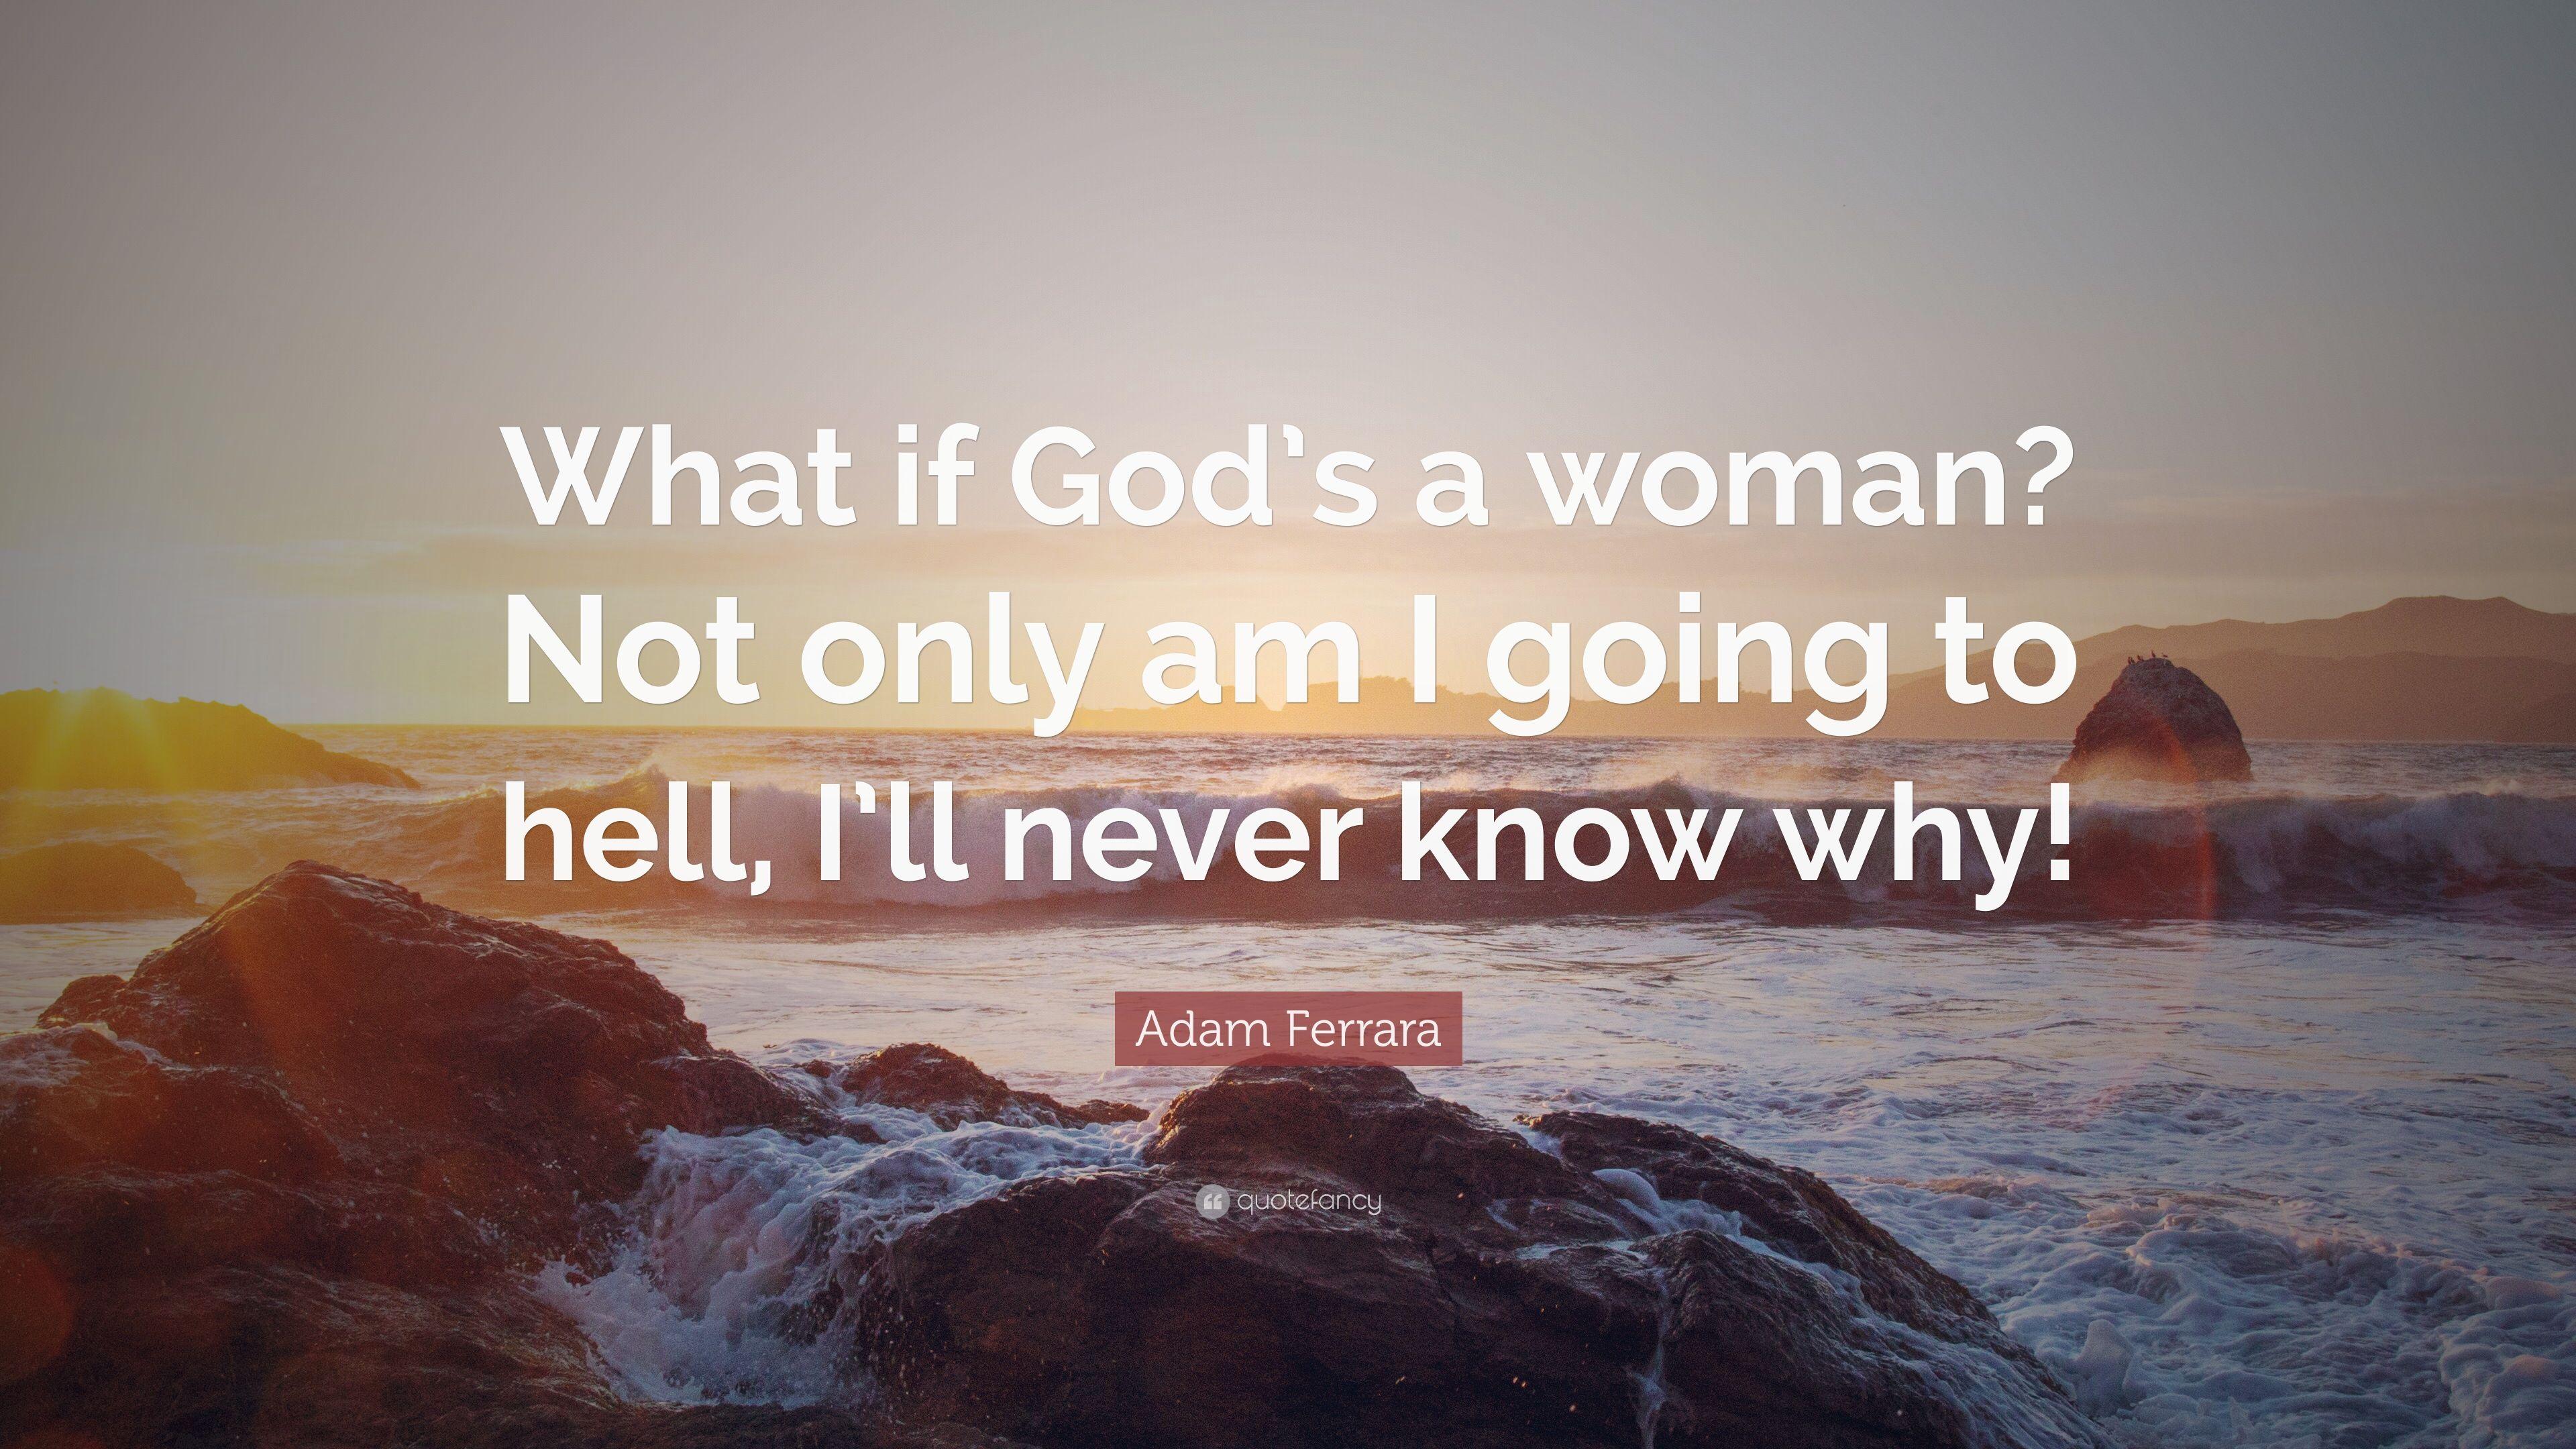 Adam Ferrara Quote: "What if God's a woman? 